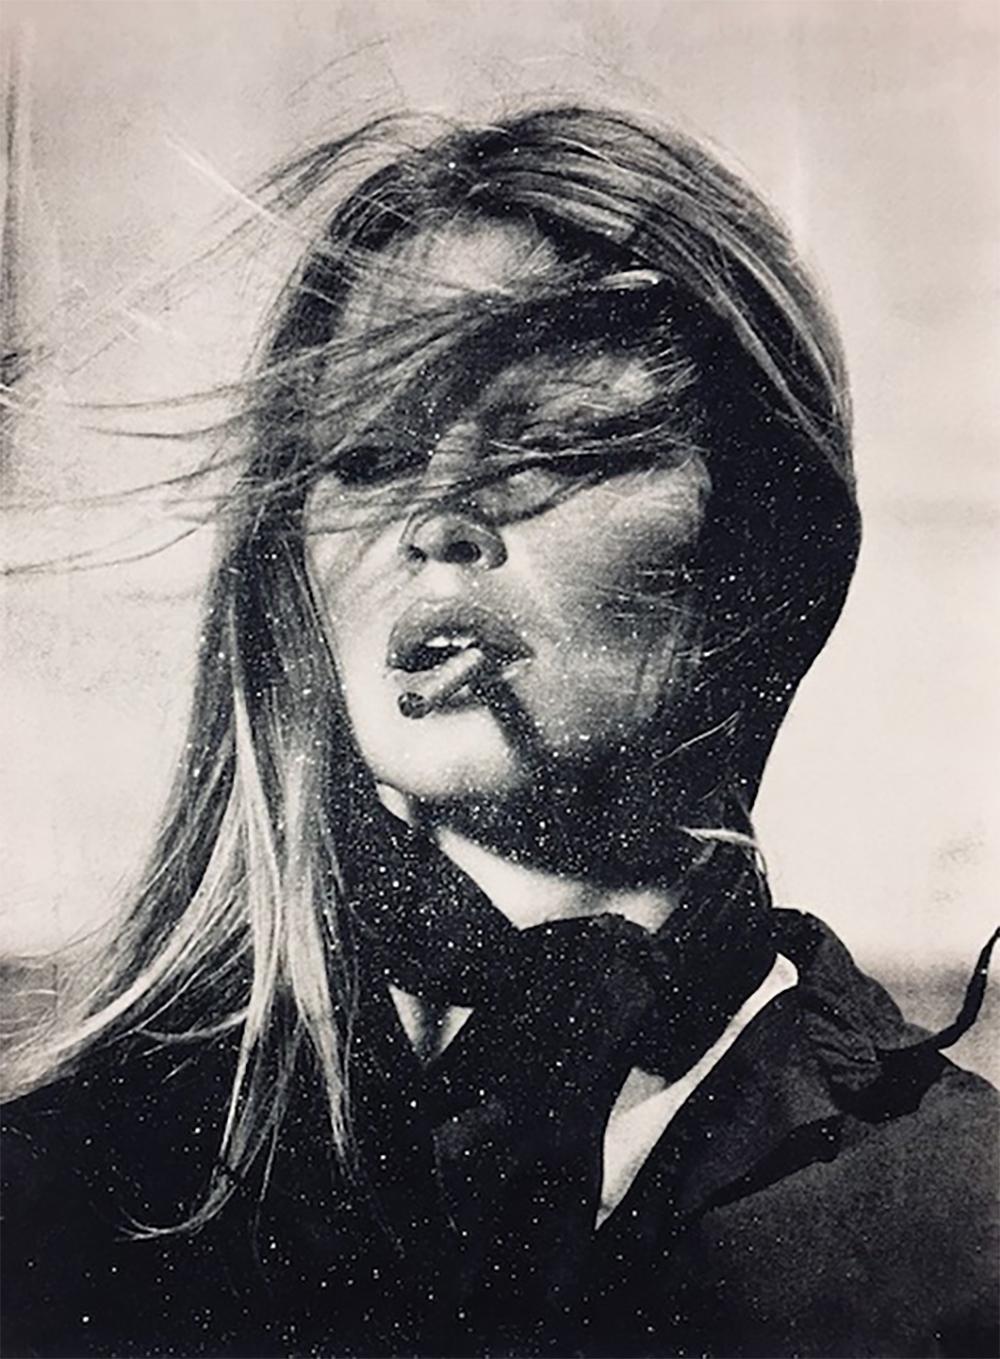 Bardot Noir et Blanc - Pop Art Mixed Media Art by Terry O'Neill & Keiko Noah